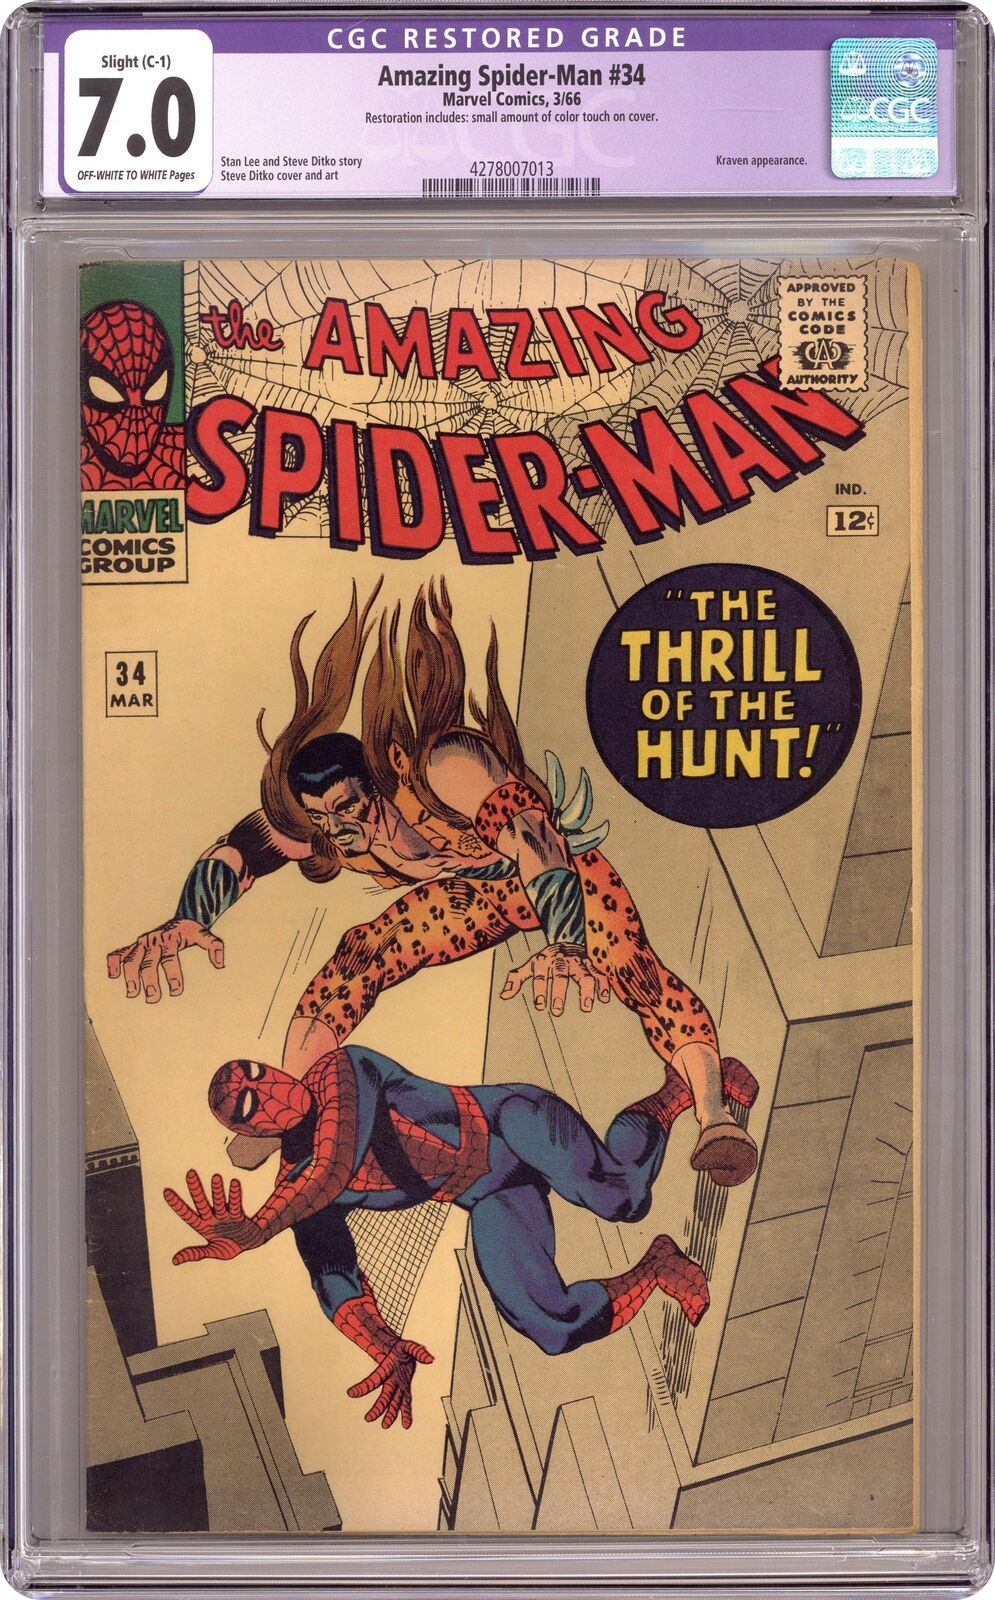 Amazing Spider-Man #34 CGC 7.0 RESTORED 1966 4278007013